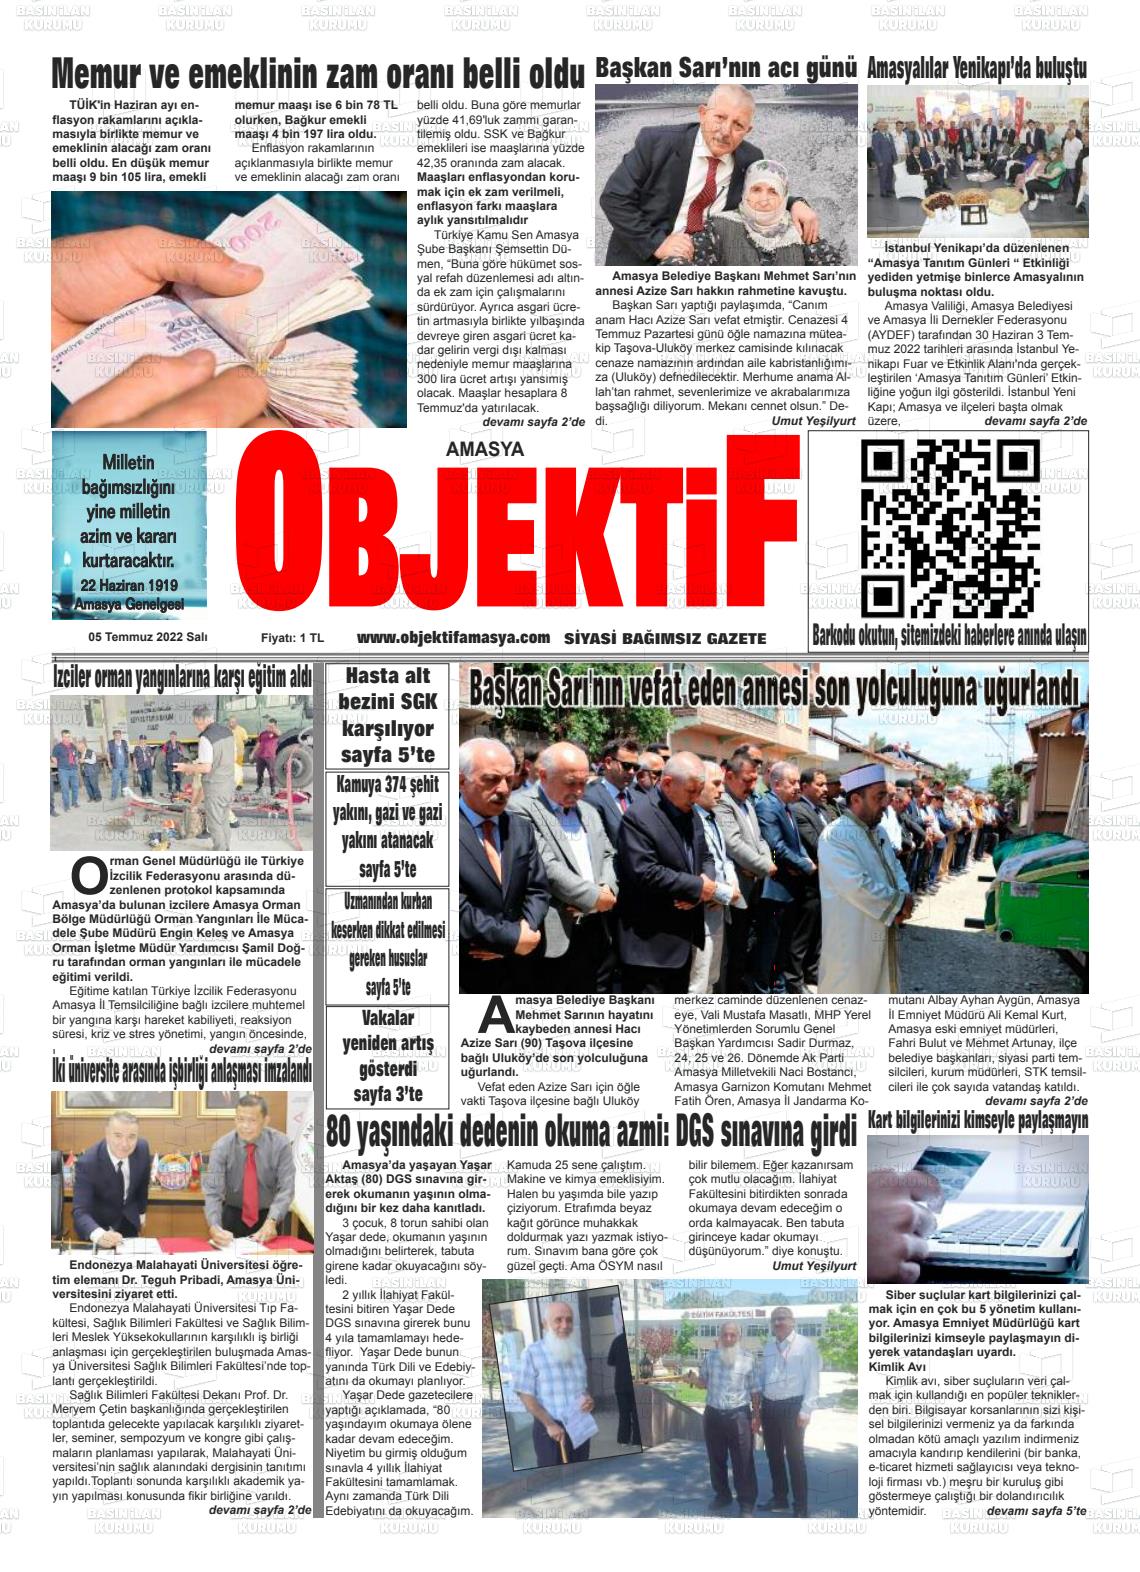 05 Temmuz 2022 Amasya Objektif Gazete Manşeti